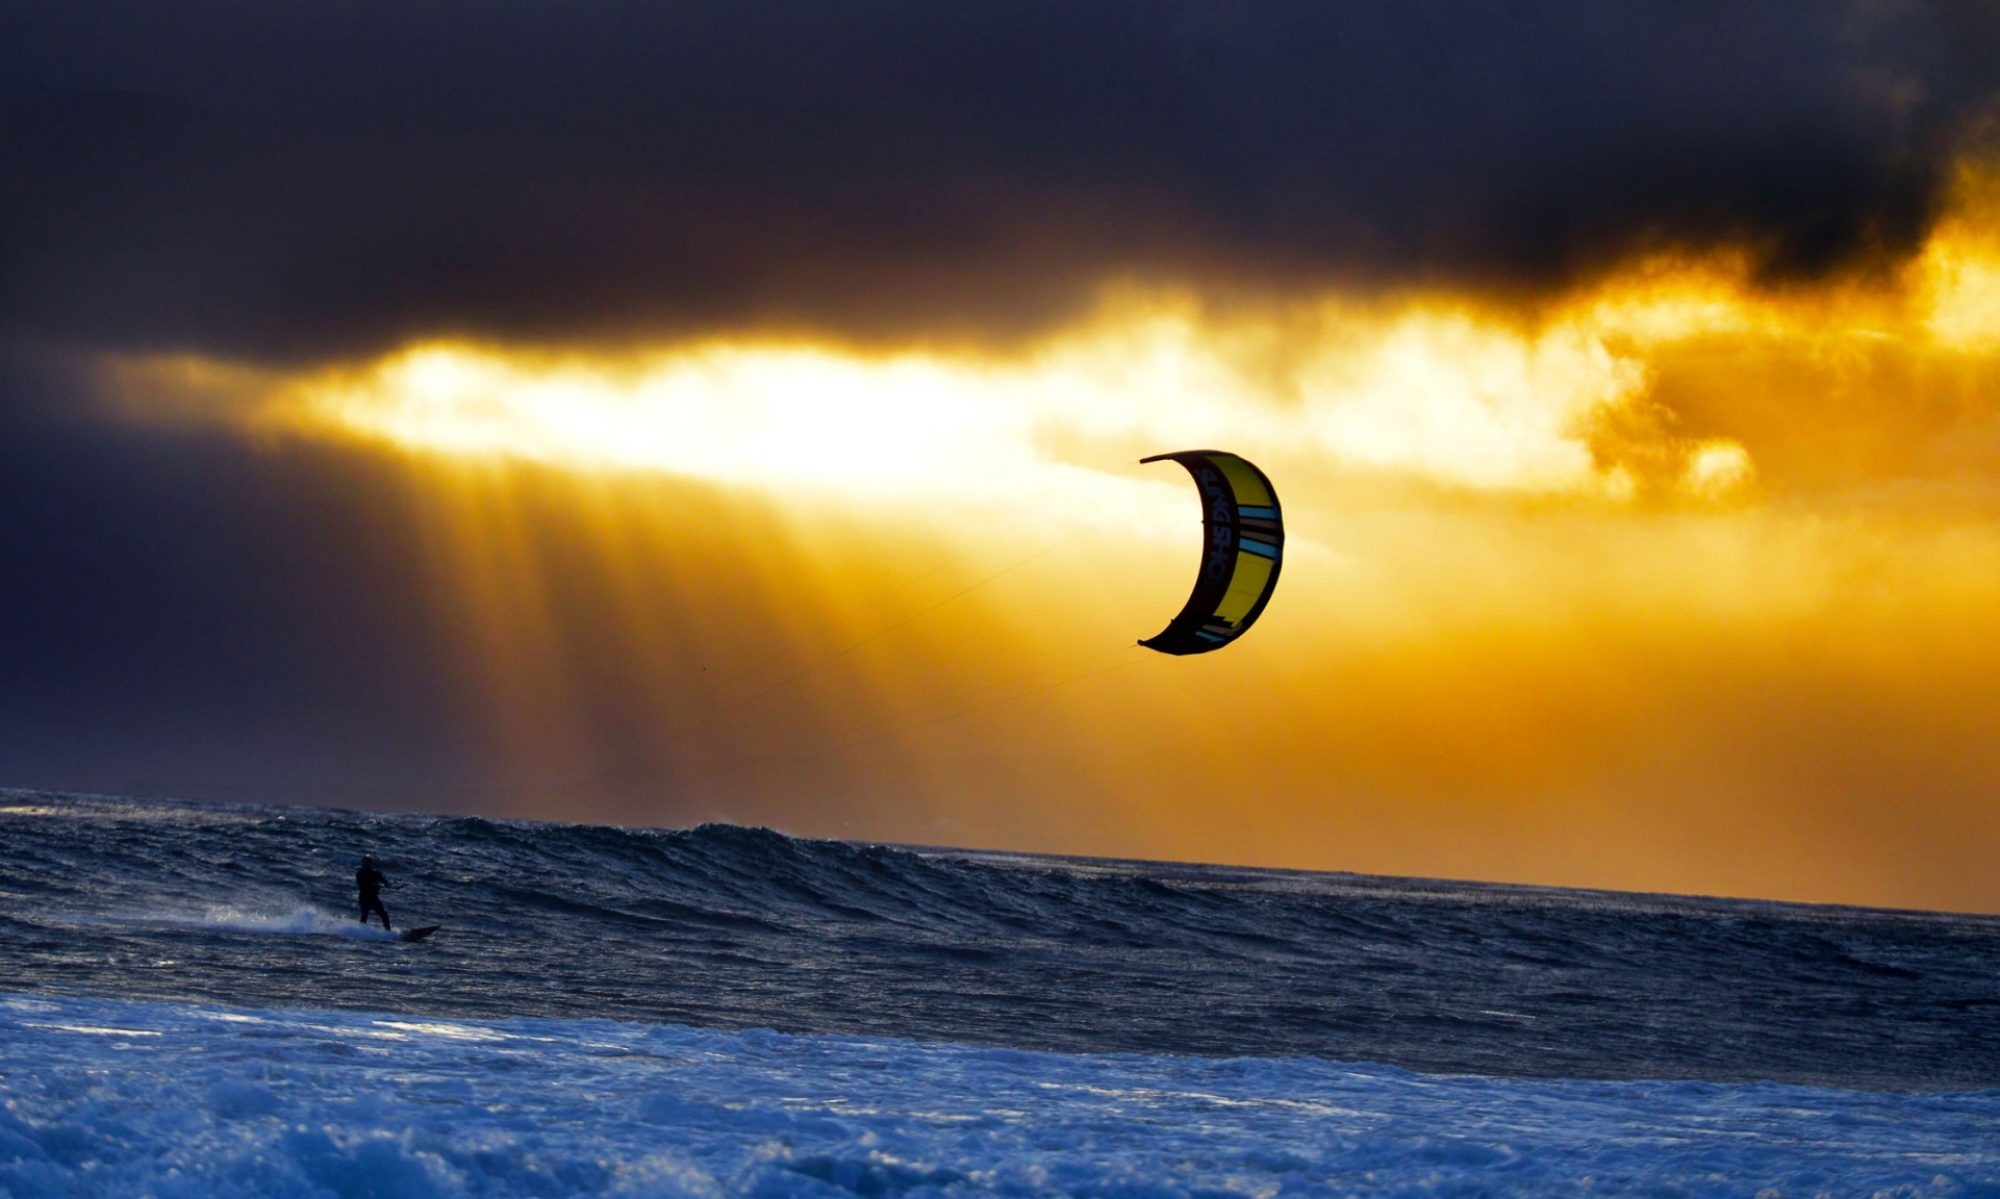 Kiteboarding: Kitesurfing at sunset, Riding waves, Wind speed. 2000x1200 HD Wallpaper.